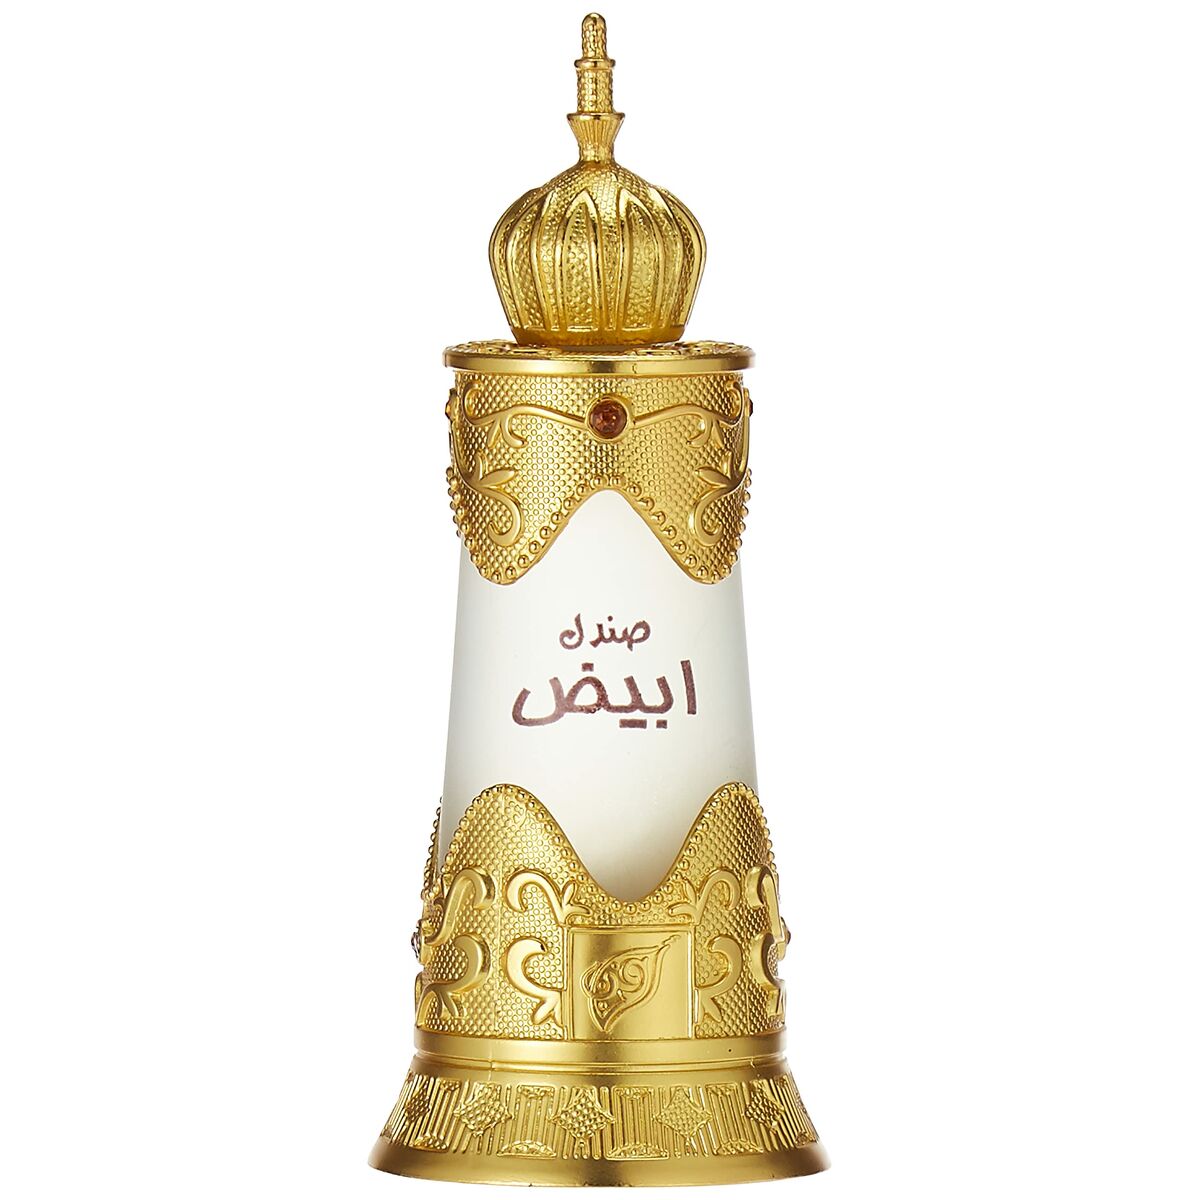 Huile de parfum Afnan Abiyad Sandal (20 ml) - Afnan - Jardin D'Eyden - jardindeyden.fr